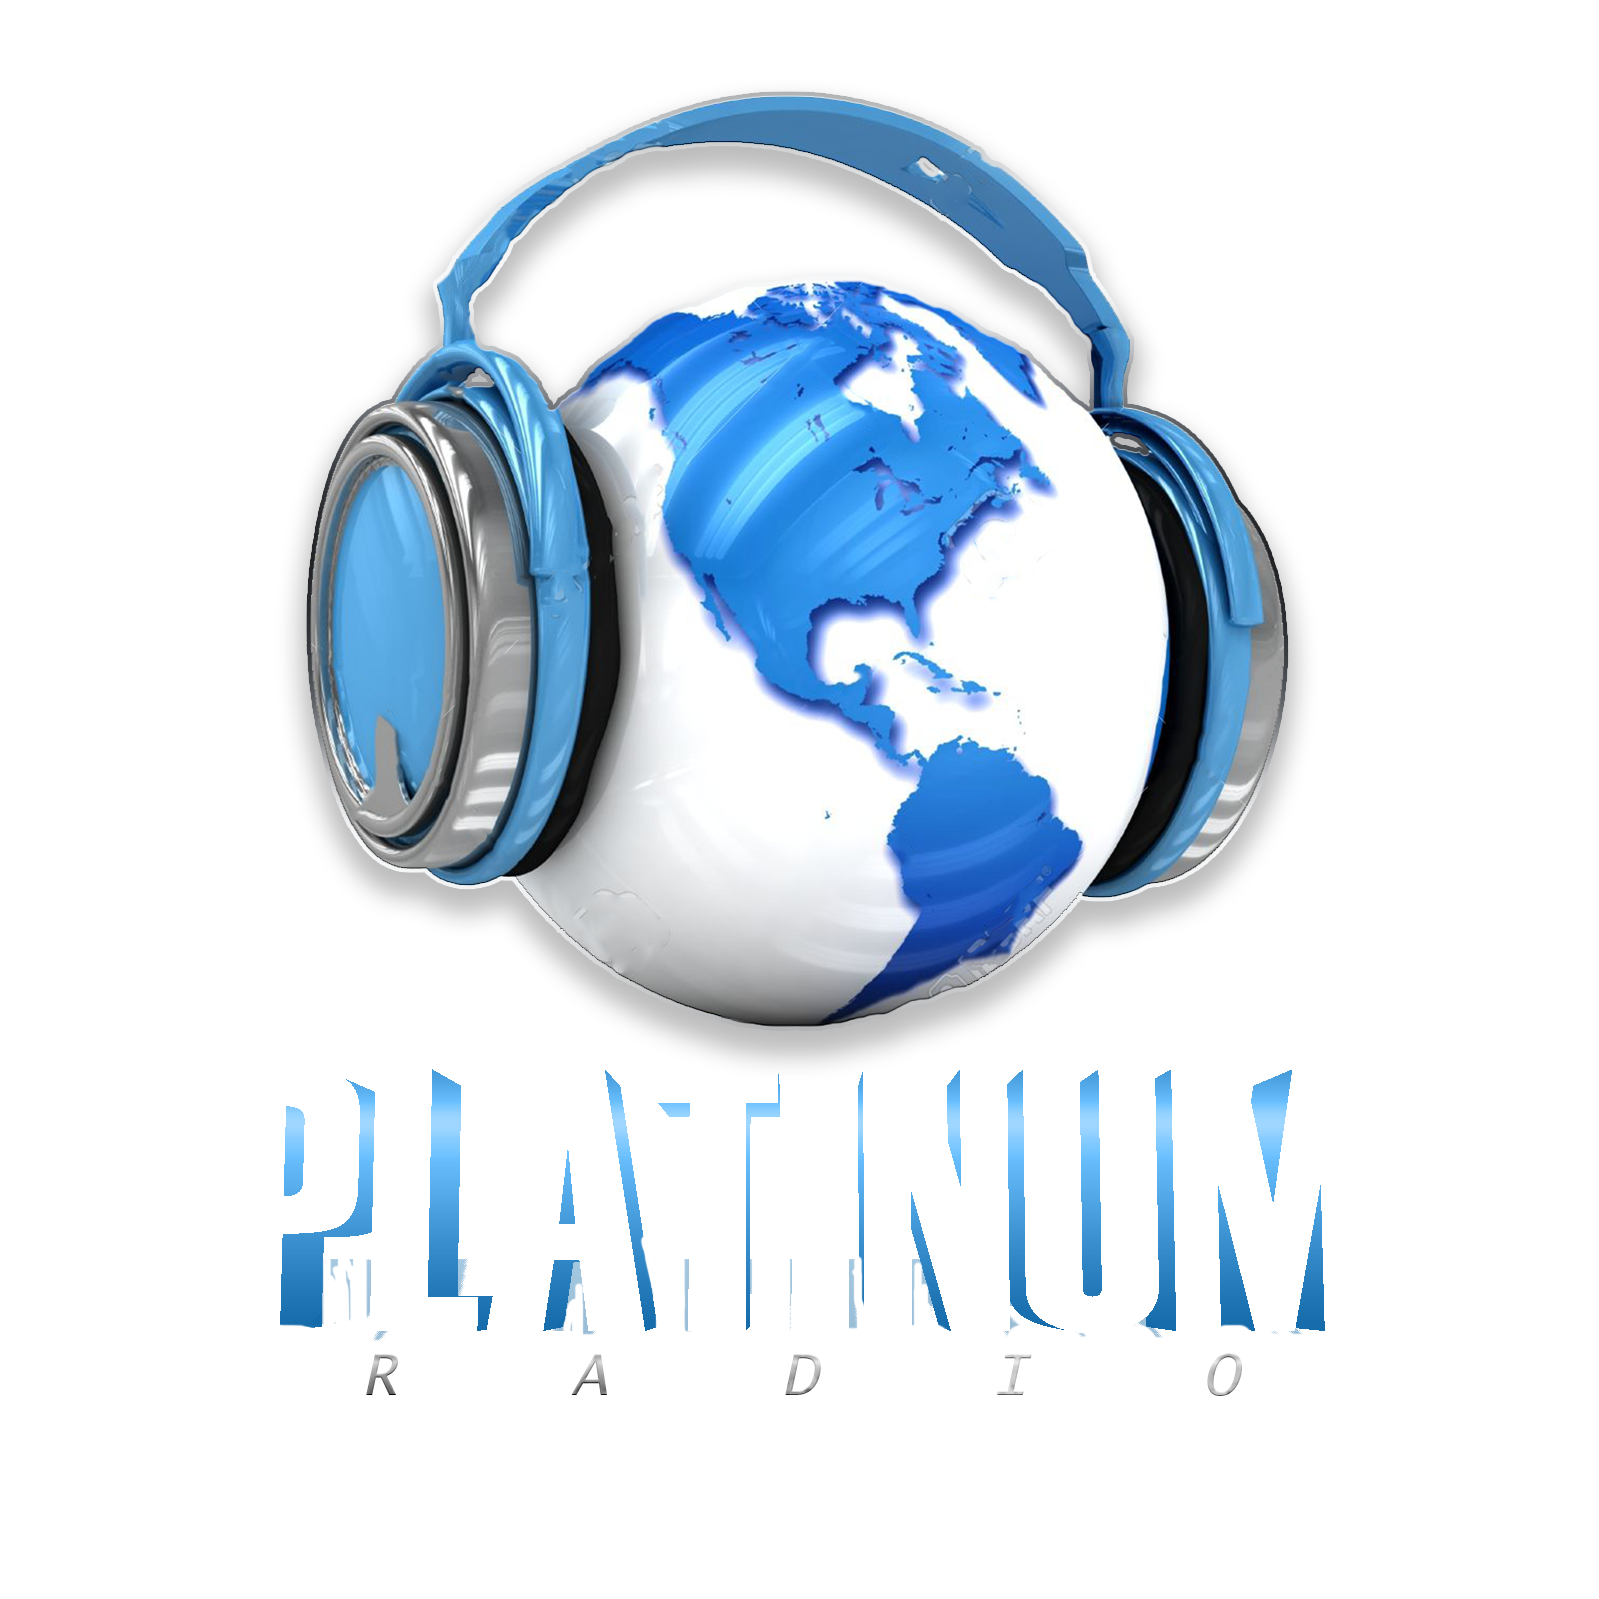 Art for This is Platinum Radio by @platinumradioonline